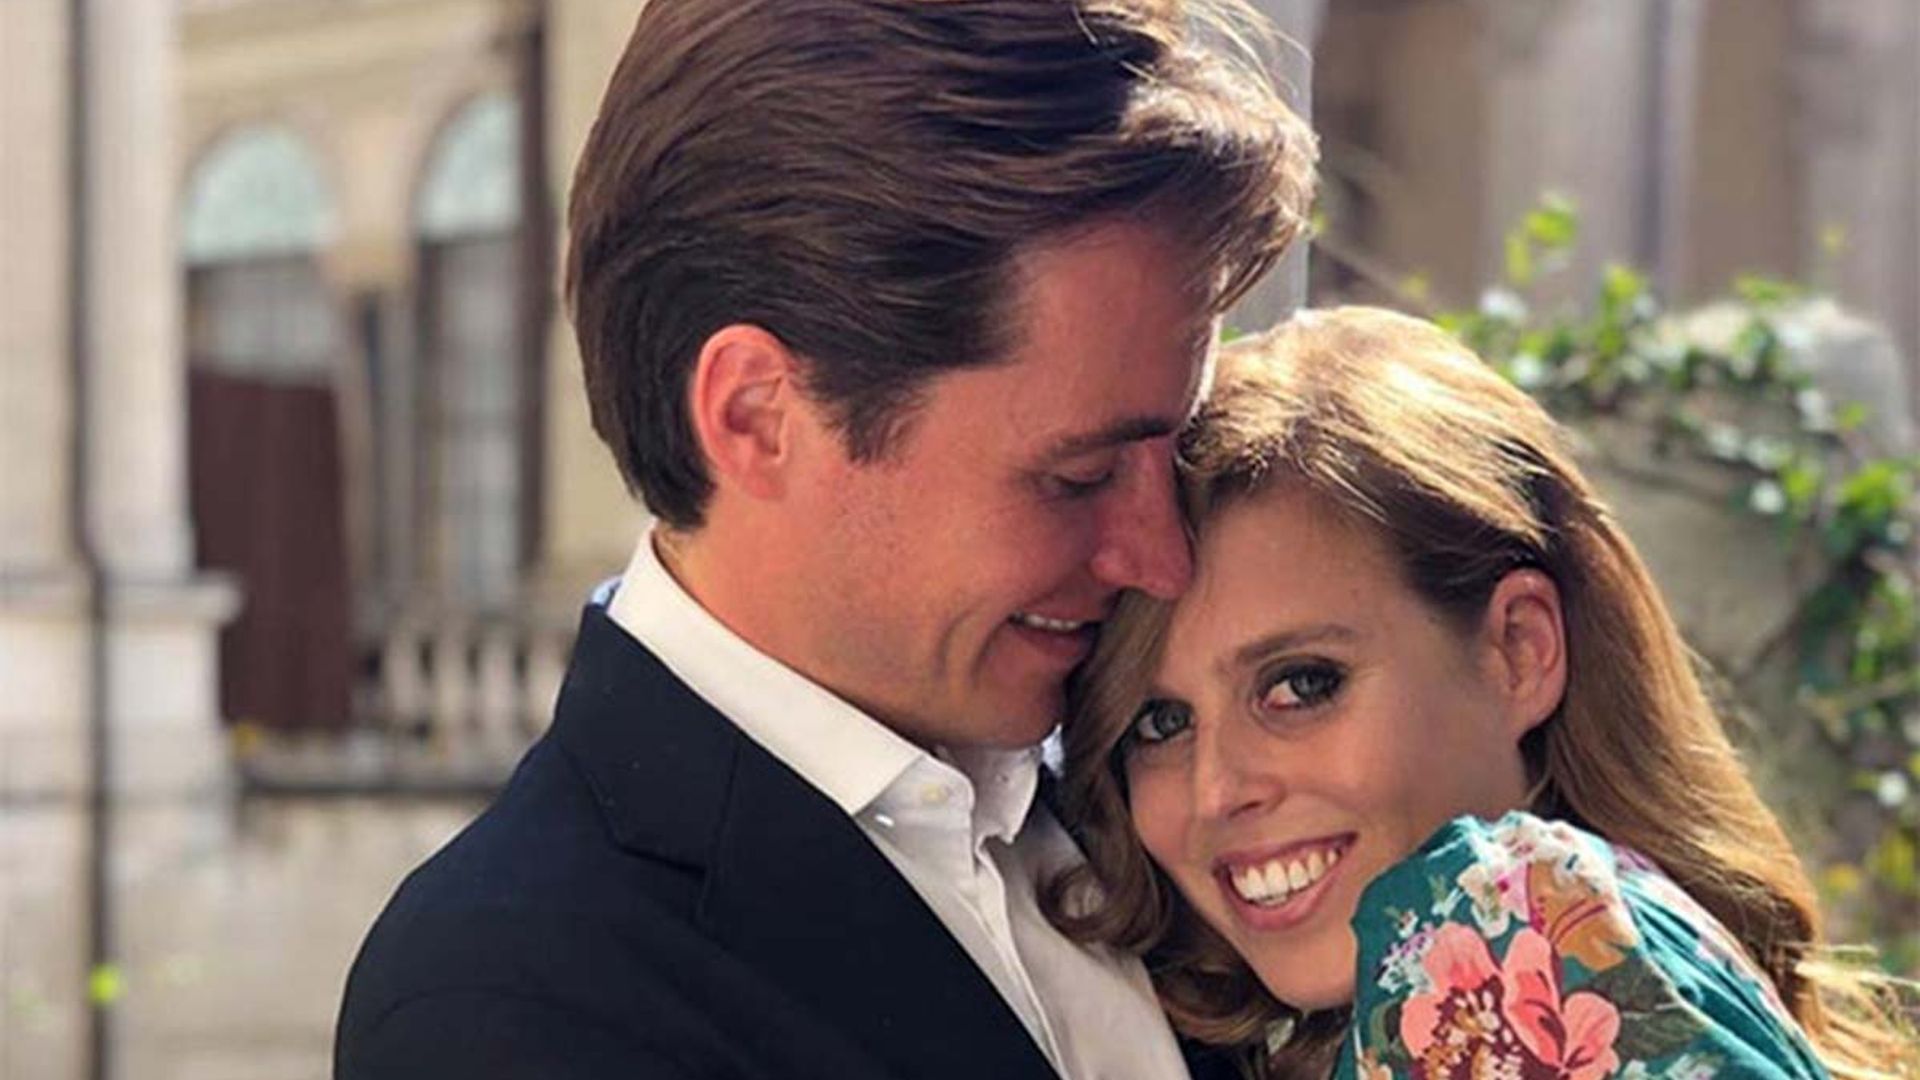 7 royal wedding events Princess Beatrice will miss amid coronavirus